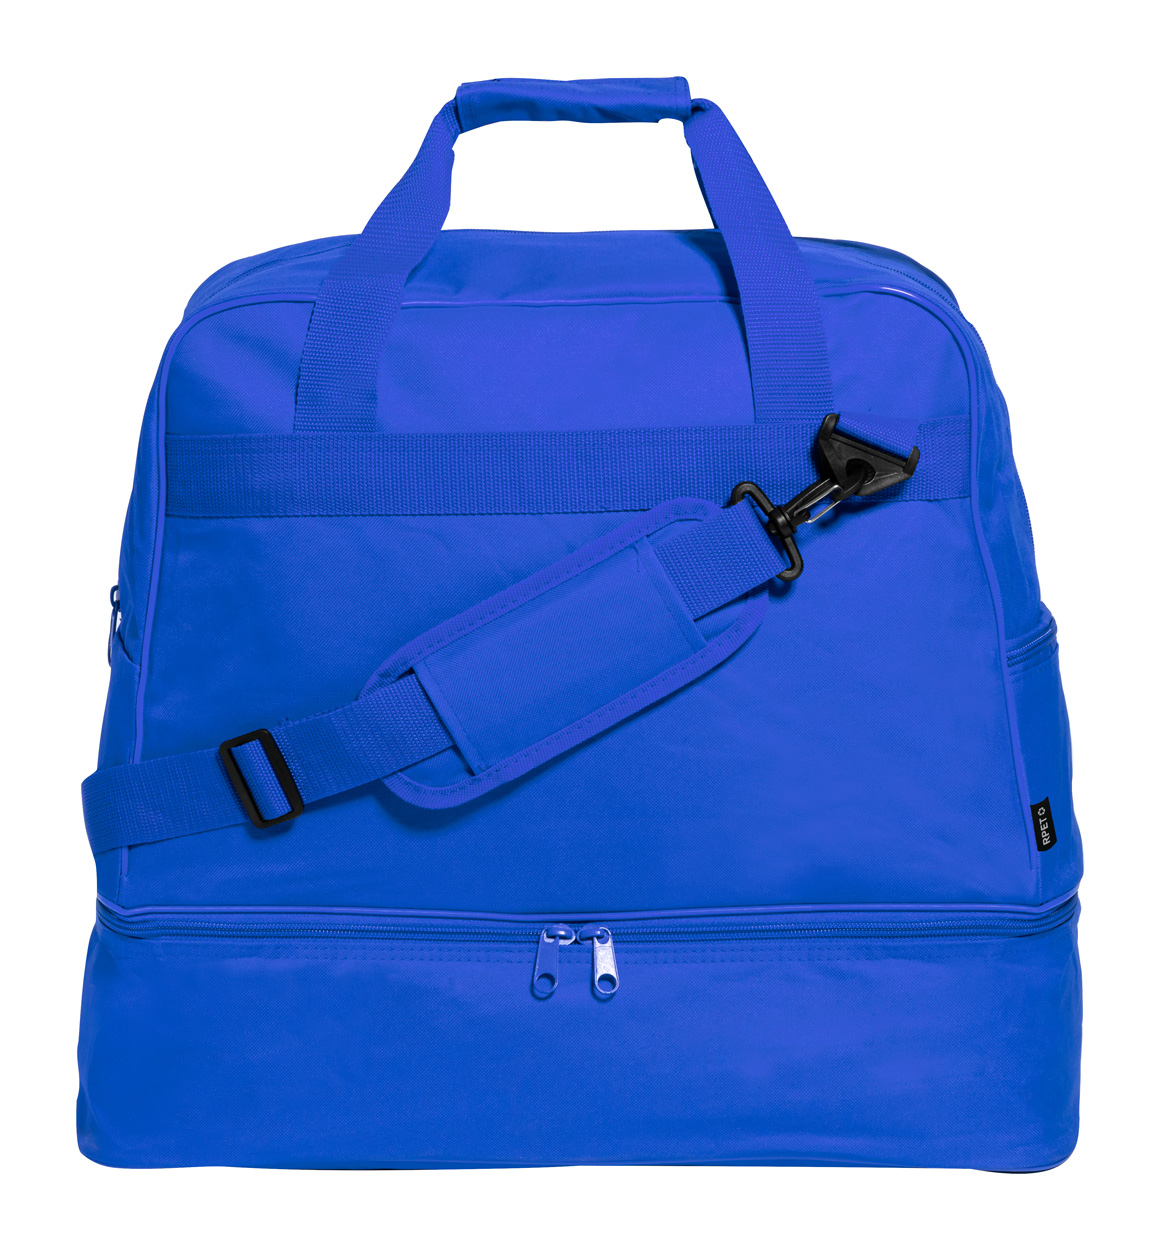 Wistol RPET sports bag - blue